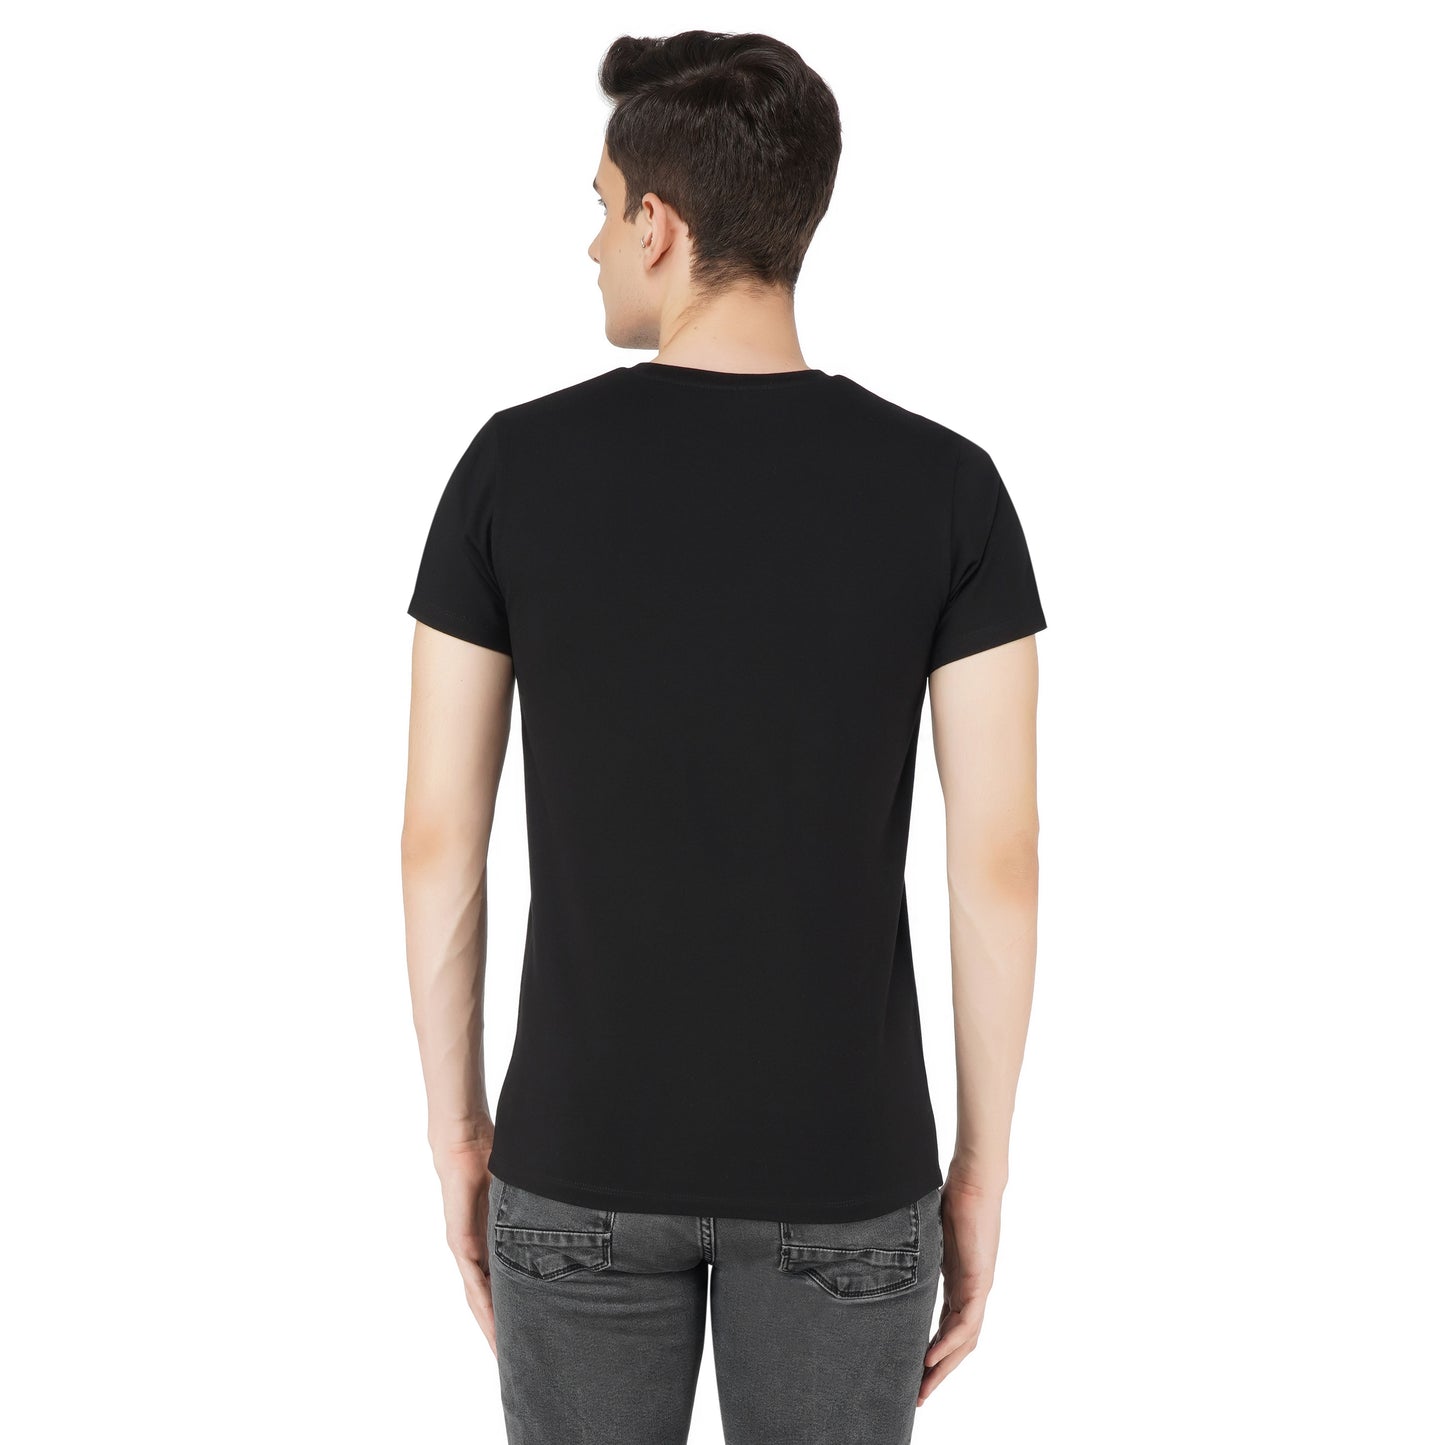 SLAY. Men's Premium Printed Black T-shirt-clothing-to-slay.myshopify.com-T-Shirt